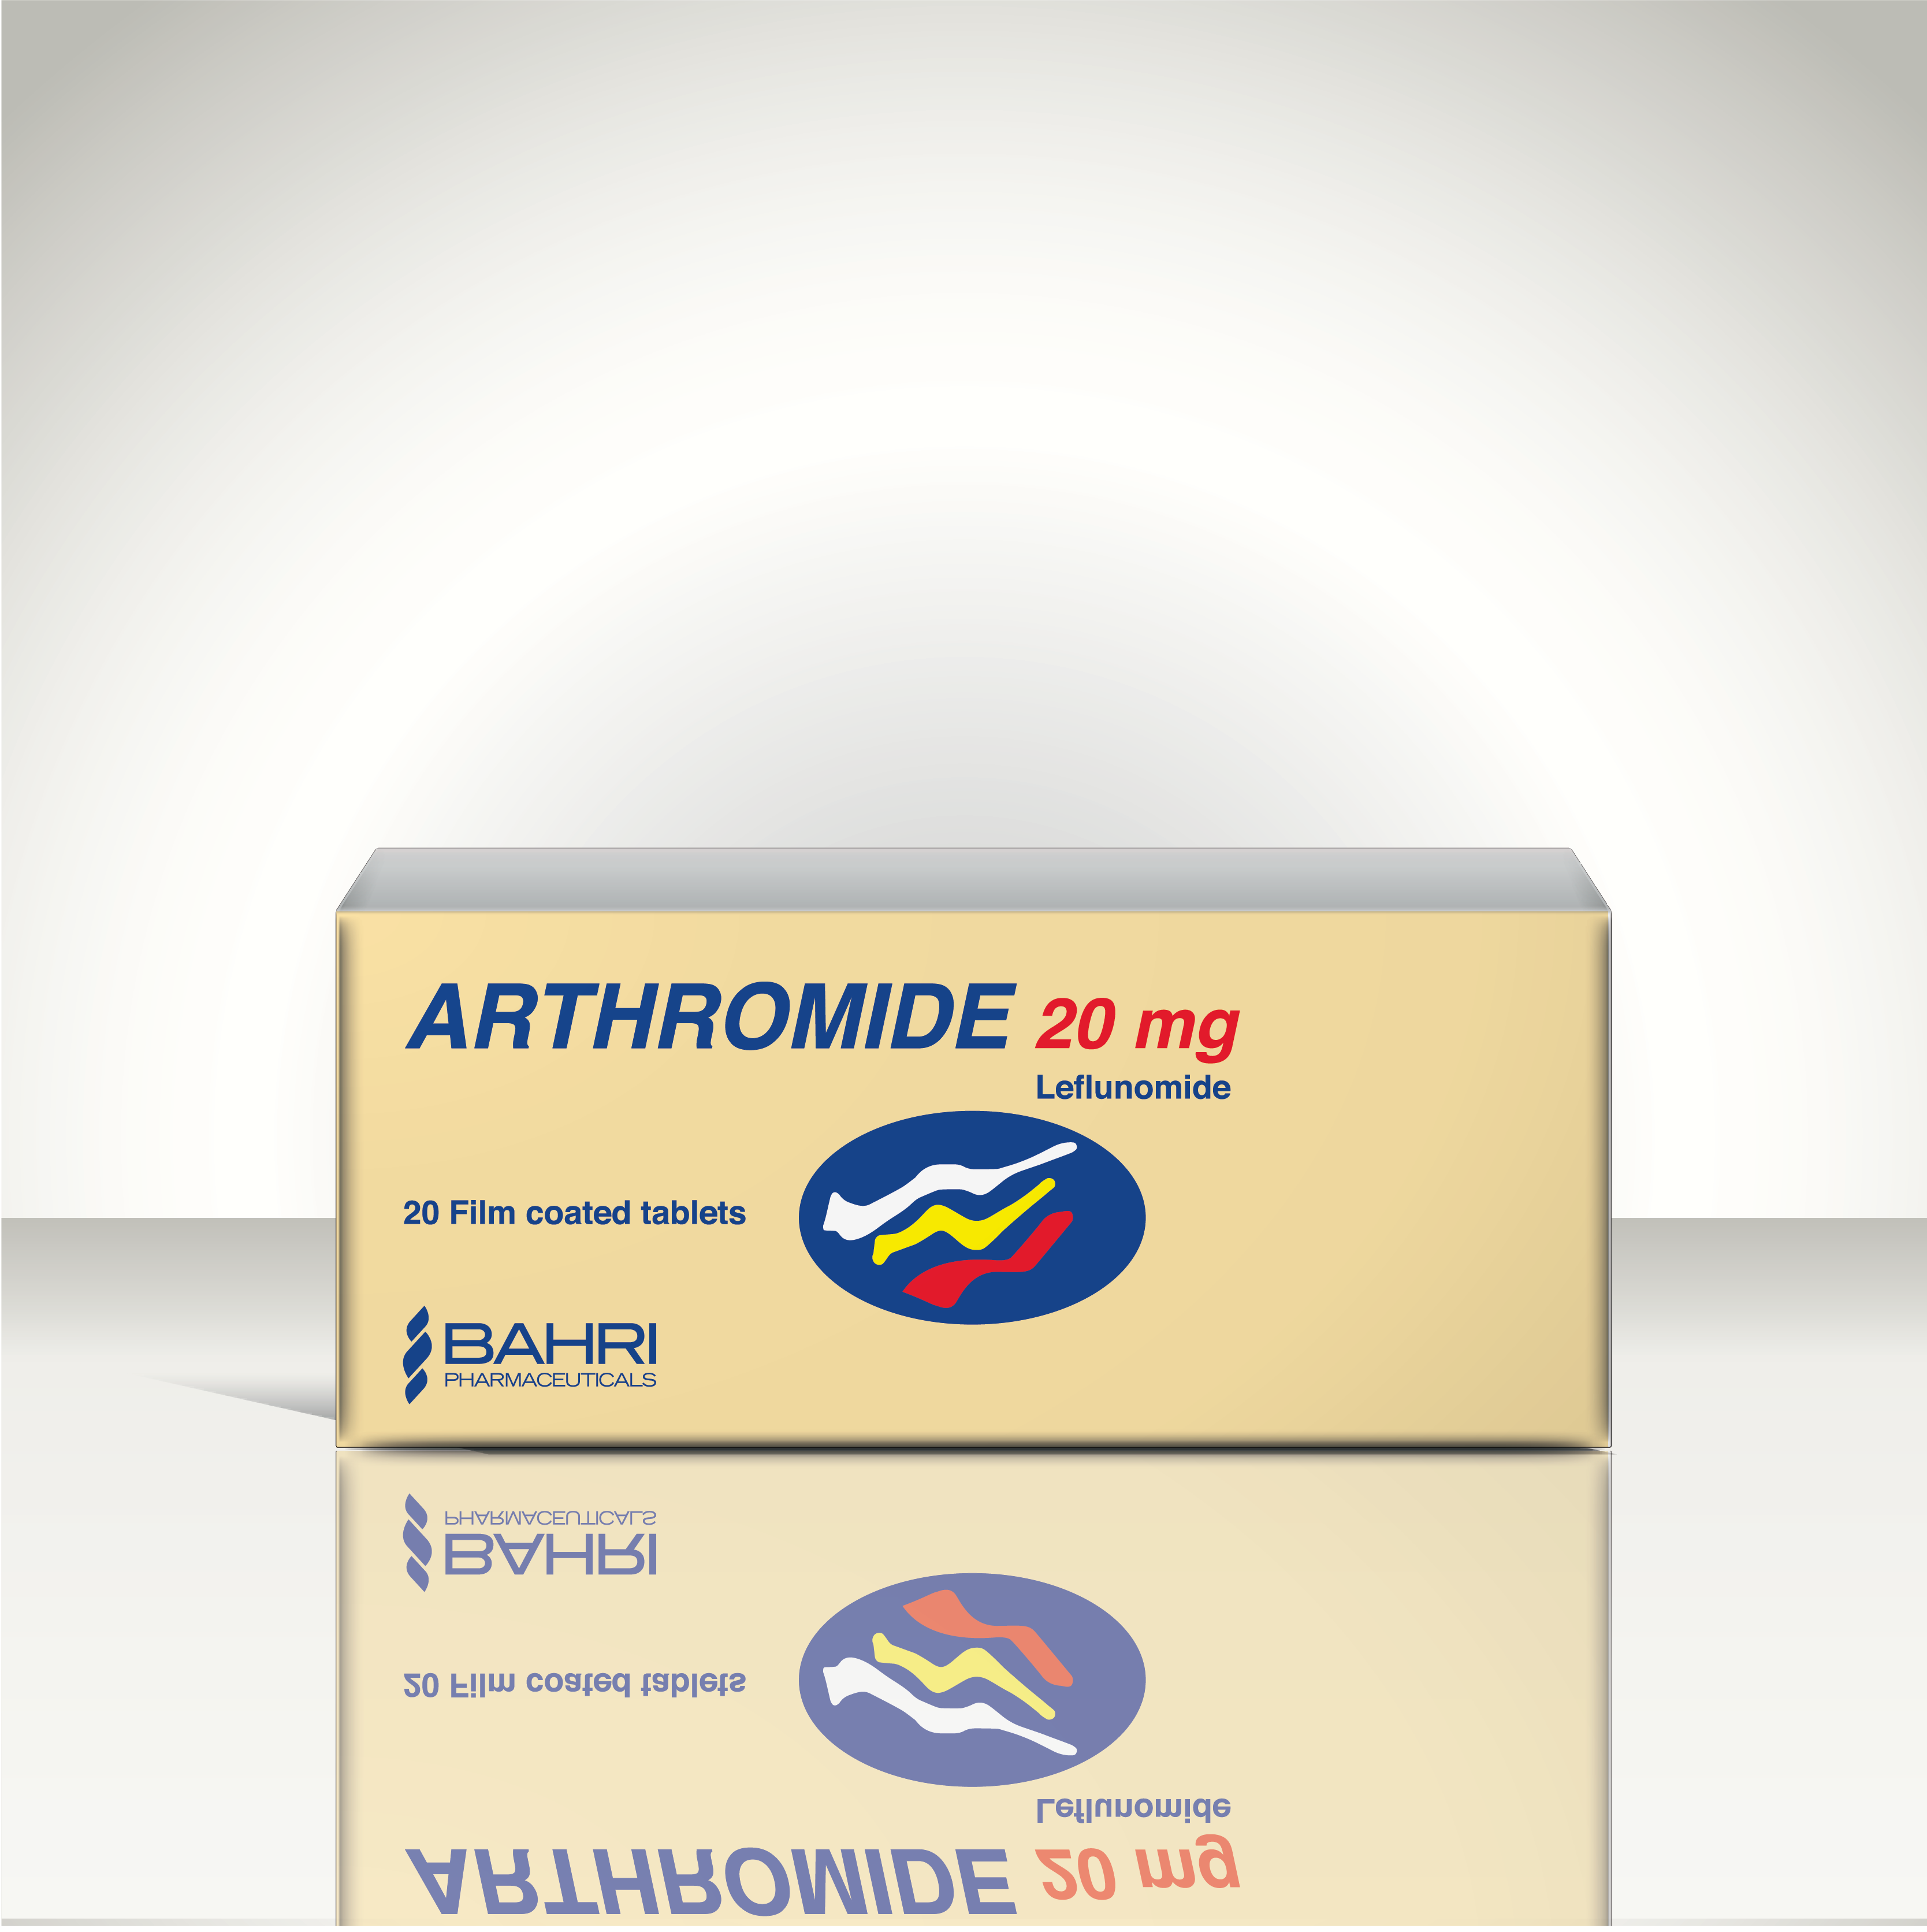 Arthromide